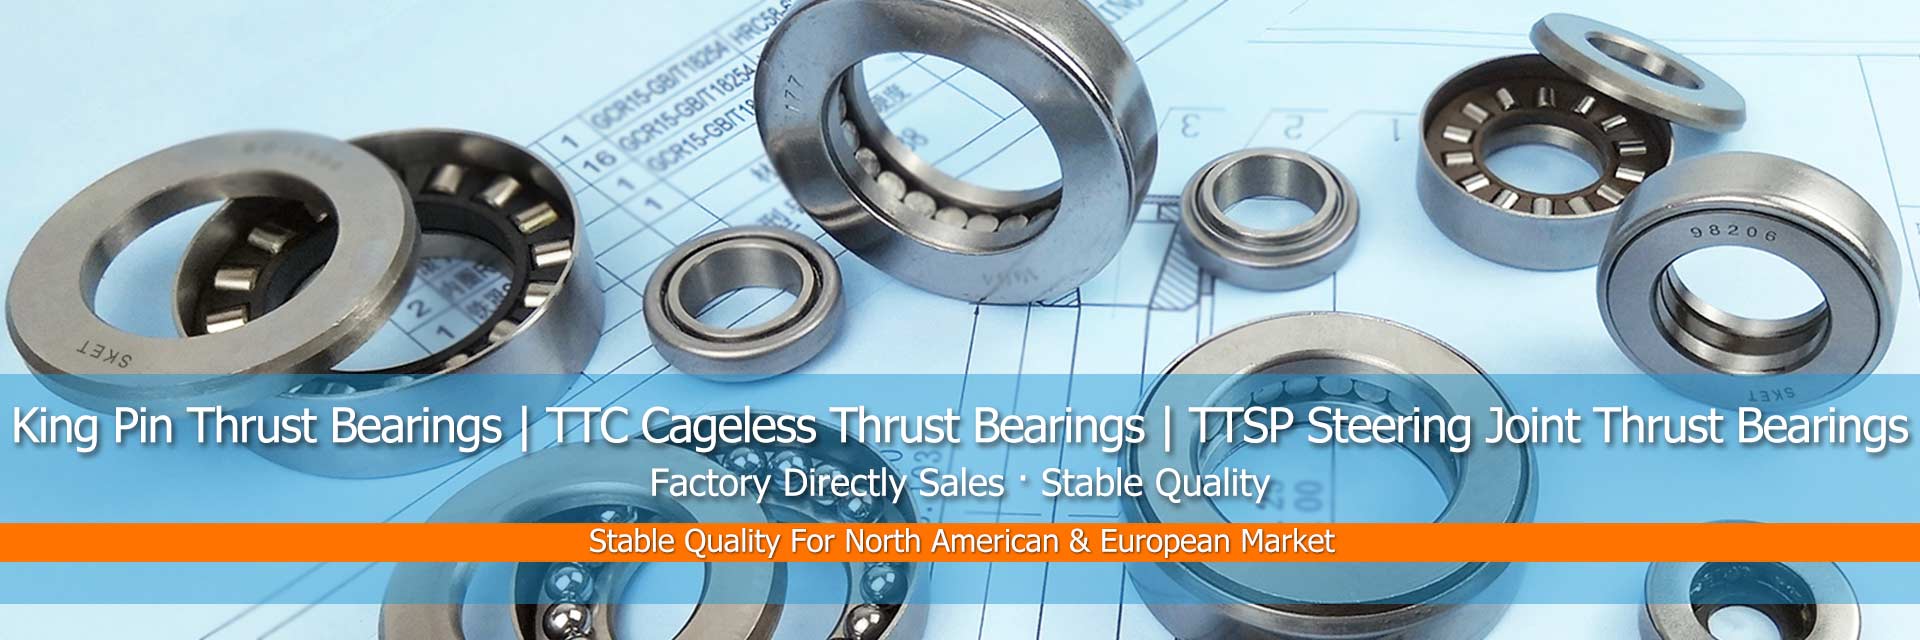 Clutch/Kingpin Thrust Bearings,TTC Cageless/TTSP Steering Joint Thrust Bearings